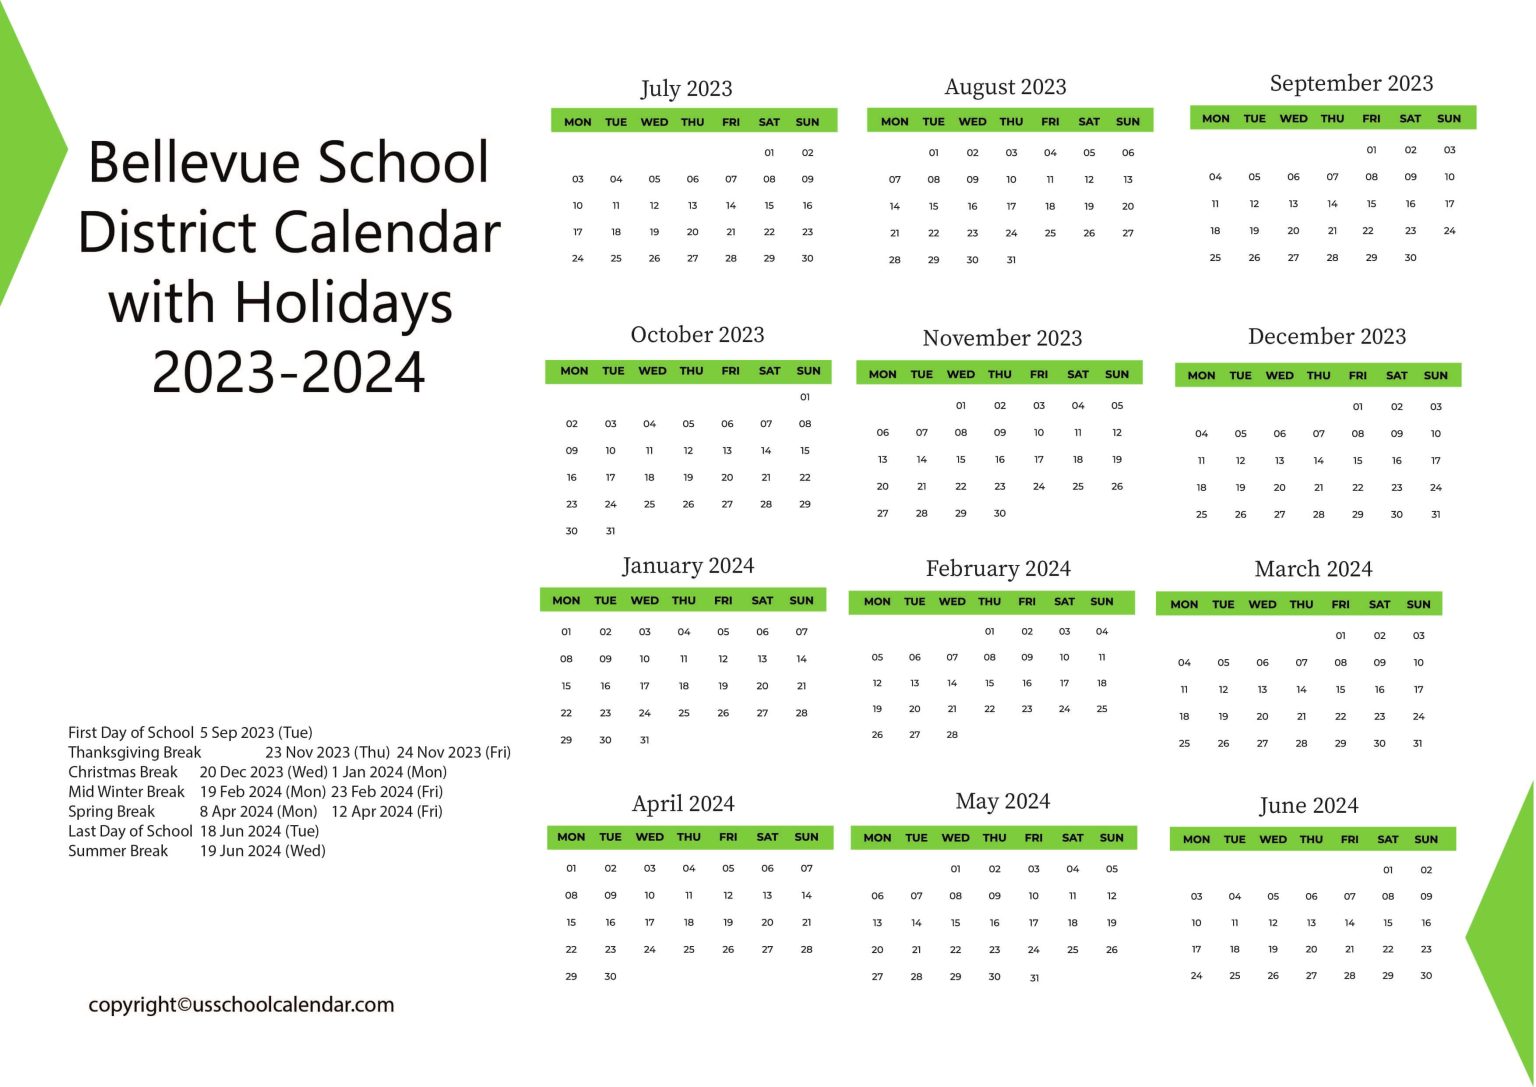 bellevue-school-district-calendar-with-holidays-2023-2024